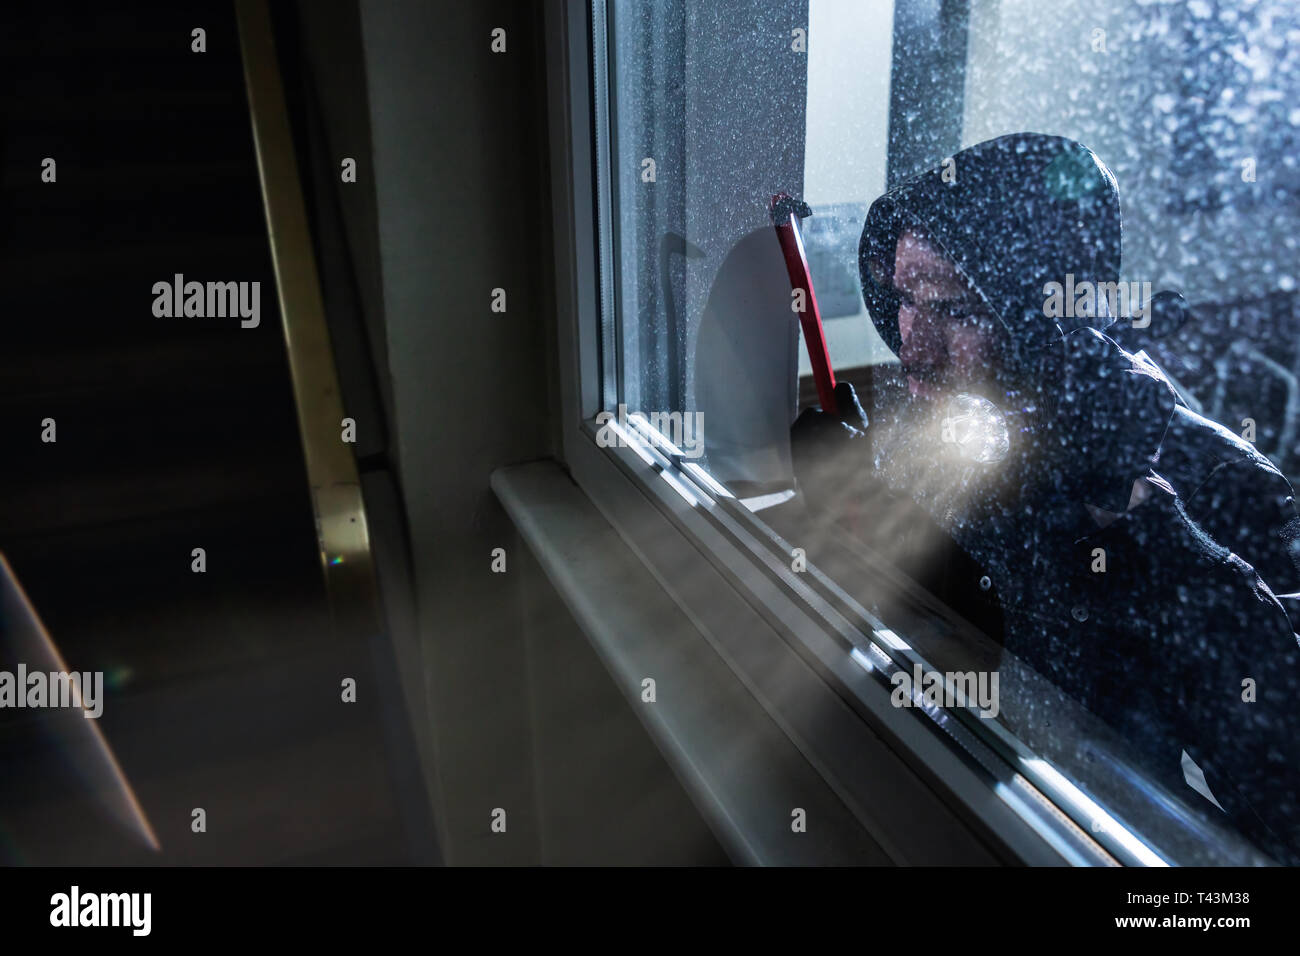 Burglar With Crowbar And Flashlight Looking Into A House Windows Stock Photo